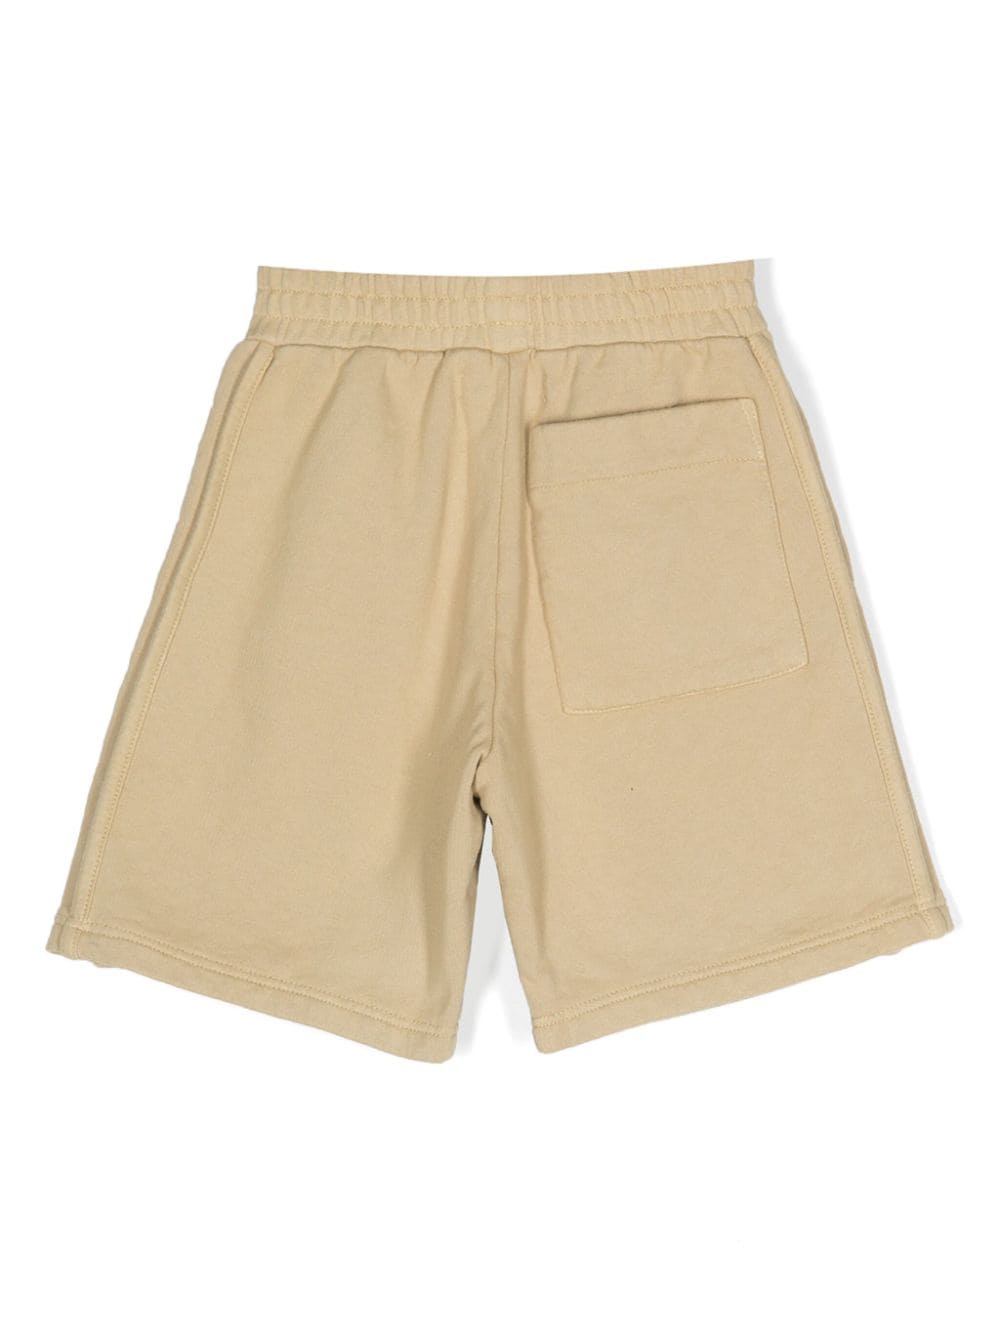 Le Camargue cotton shorts - Rubino Kids